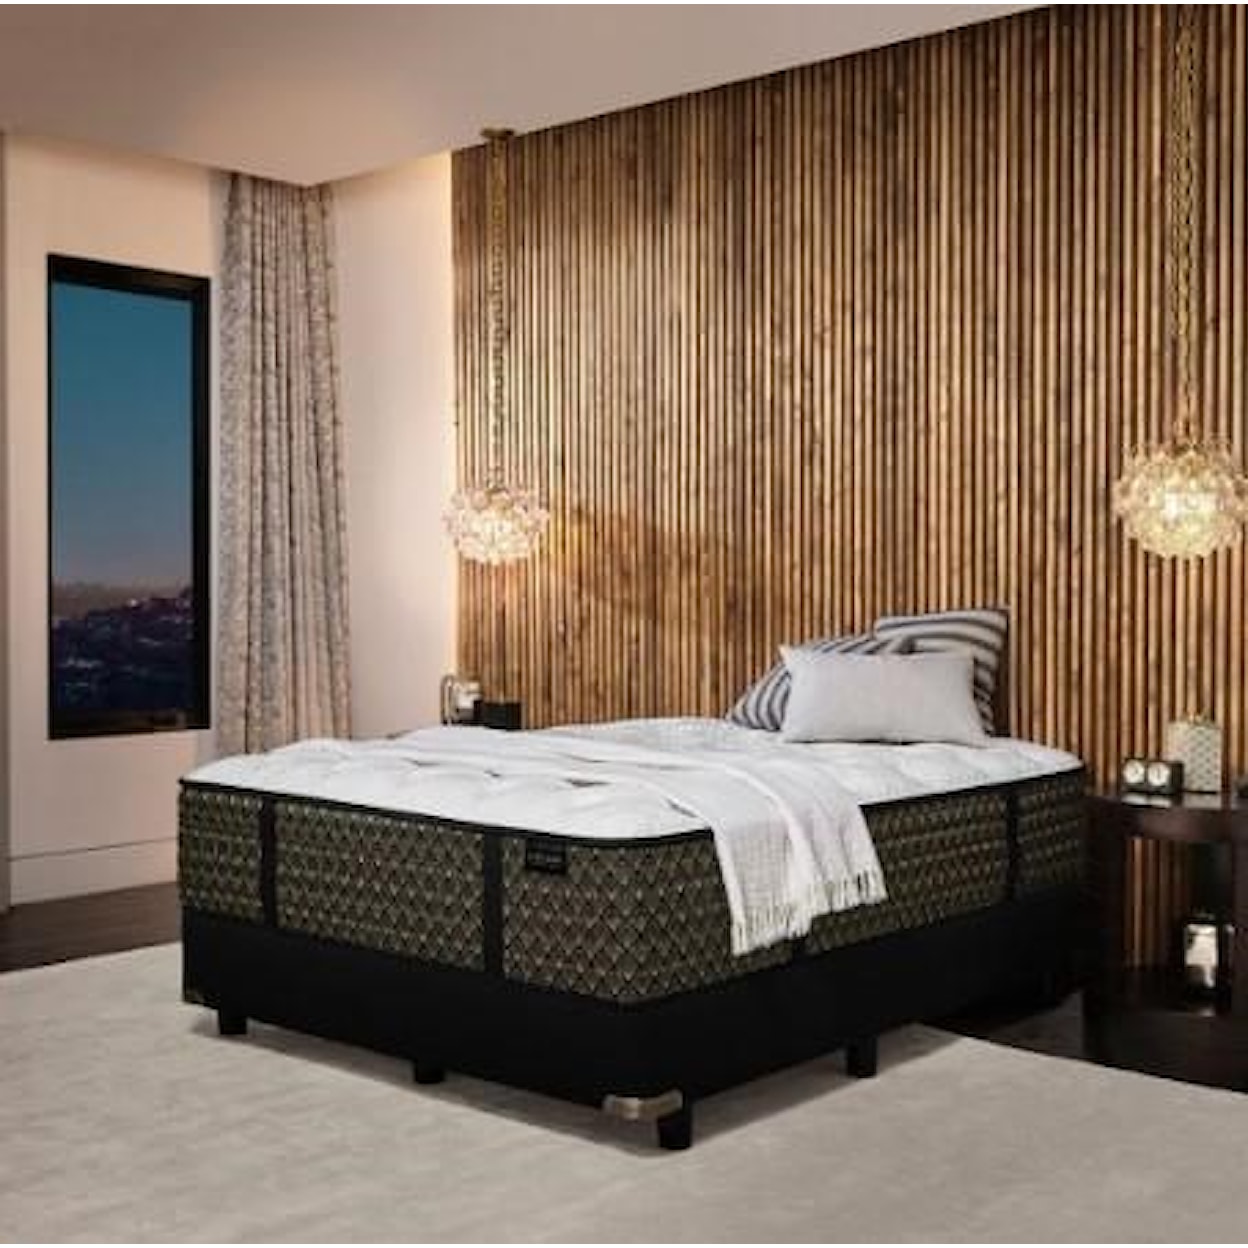 Aireloom Bedding Preferred Streamline™ Luxury Firm Twin 14" Luxury Firm Mattress